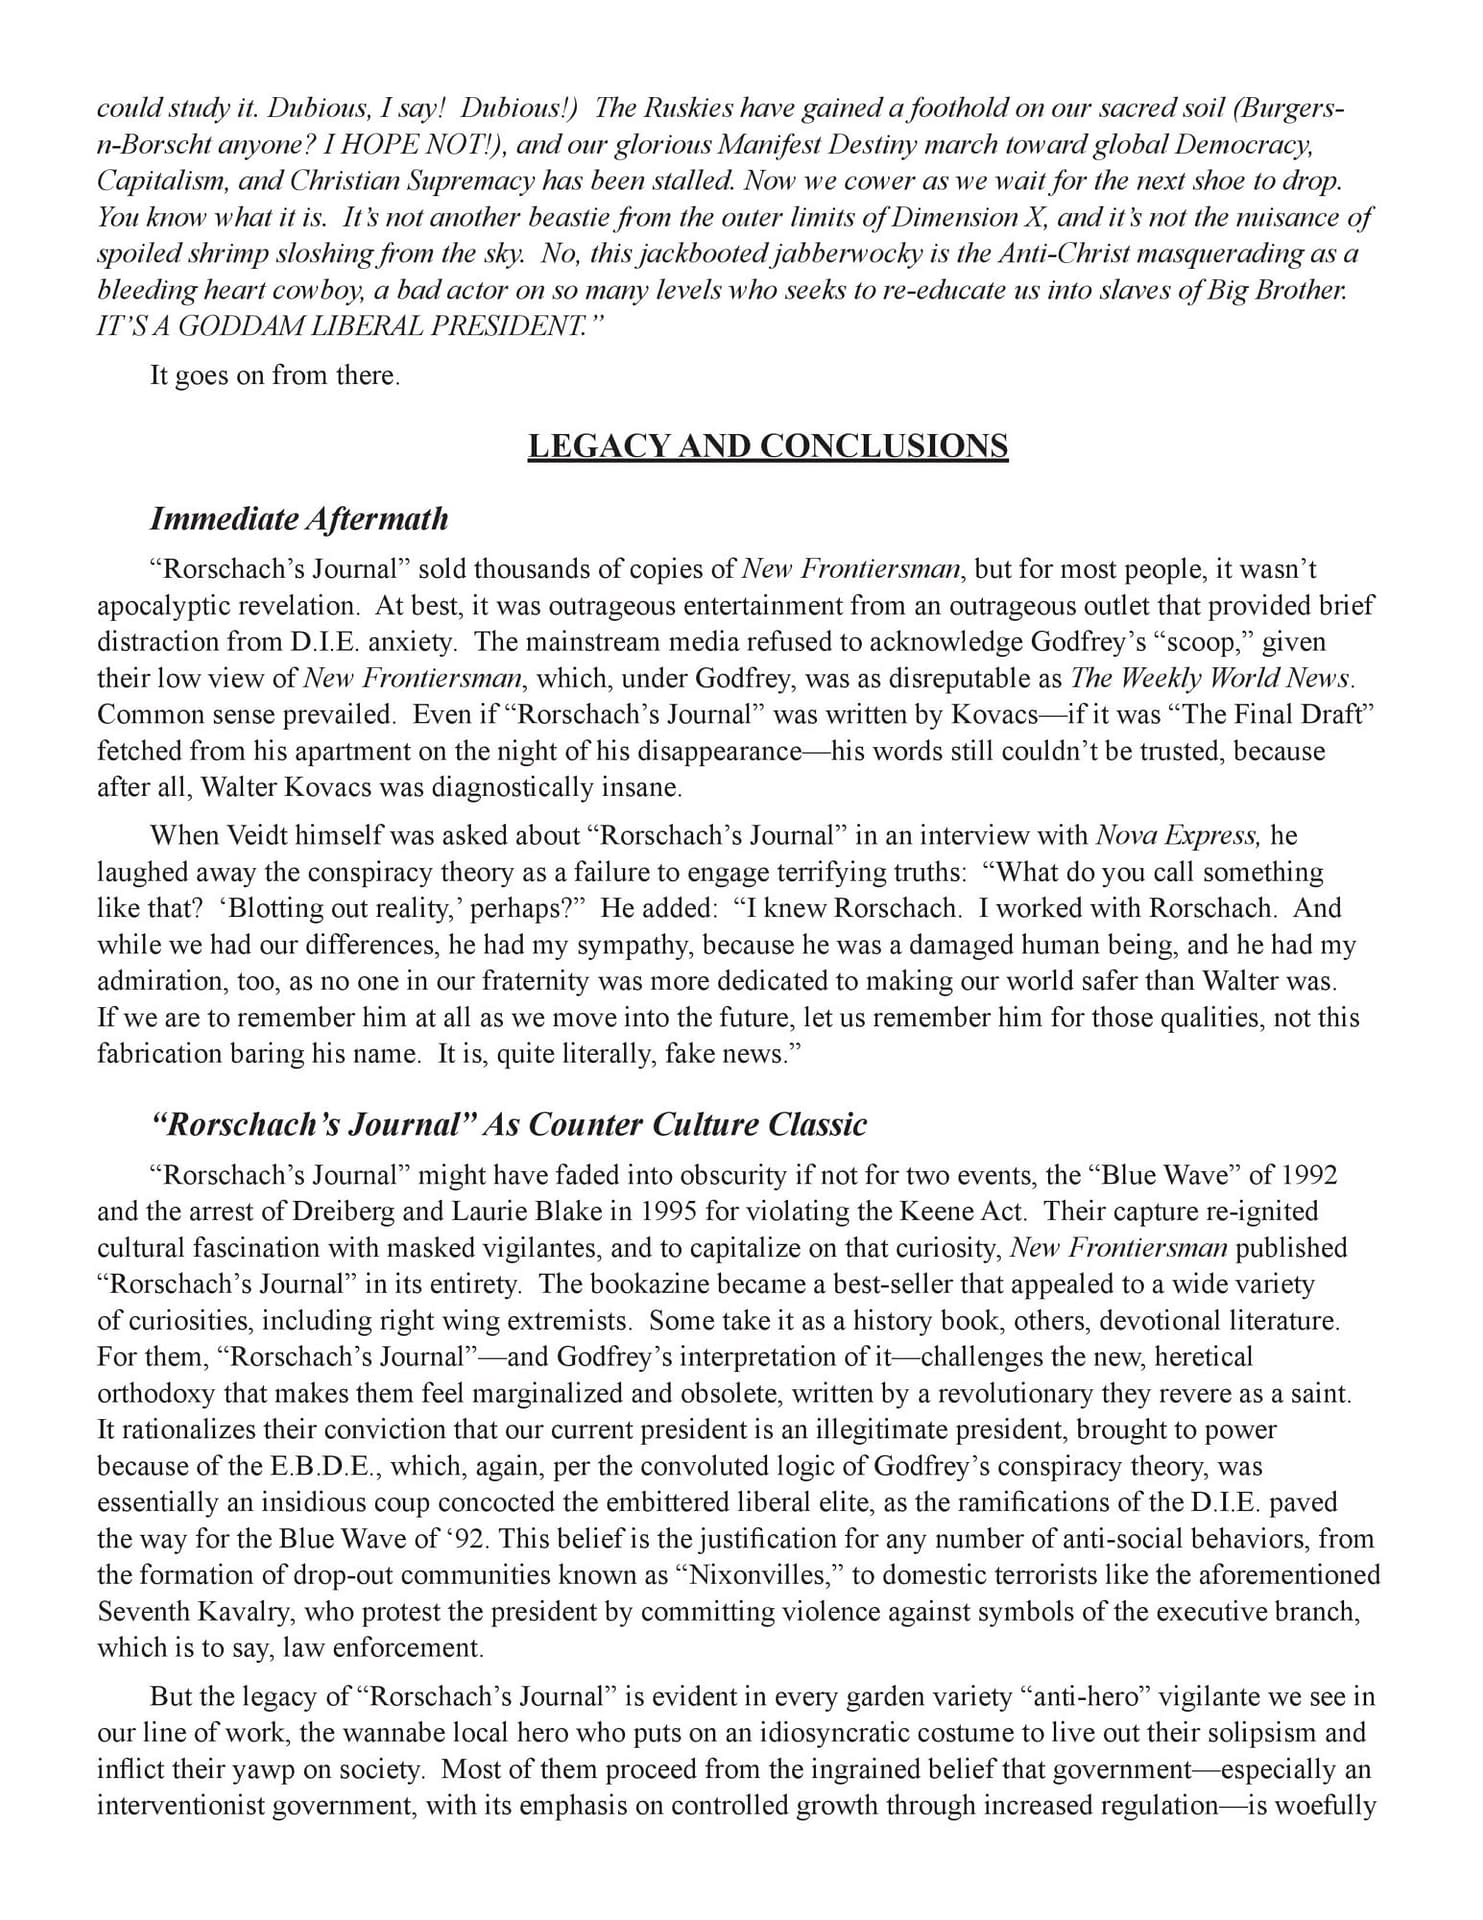 "Watchmen": "Peteypedia" Files Offer New Info on Veidt's Fate, Rorschach's Journal & More